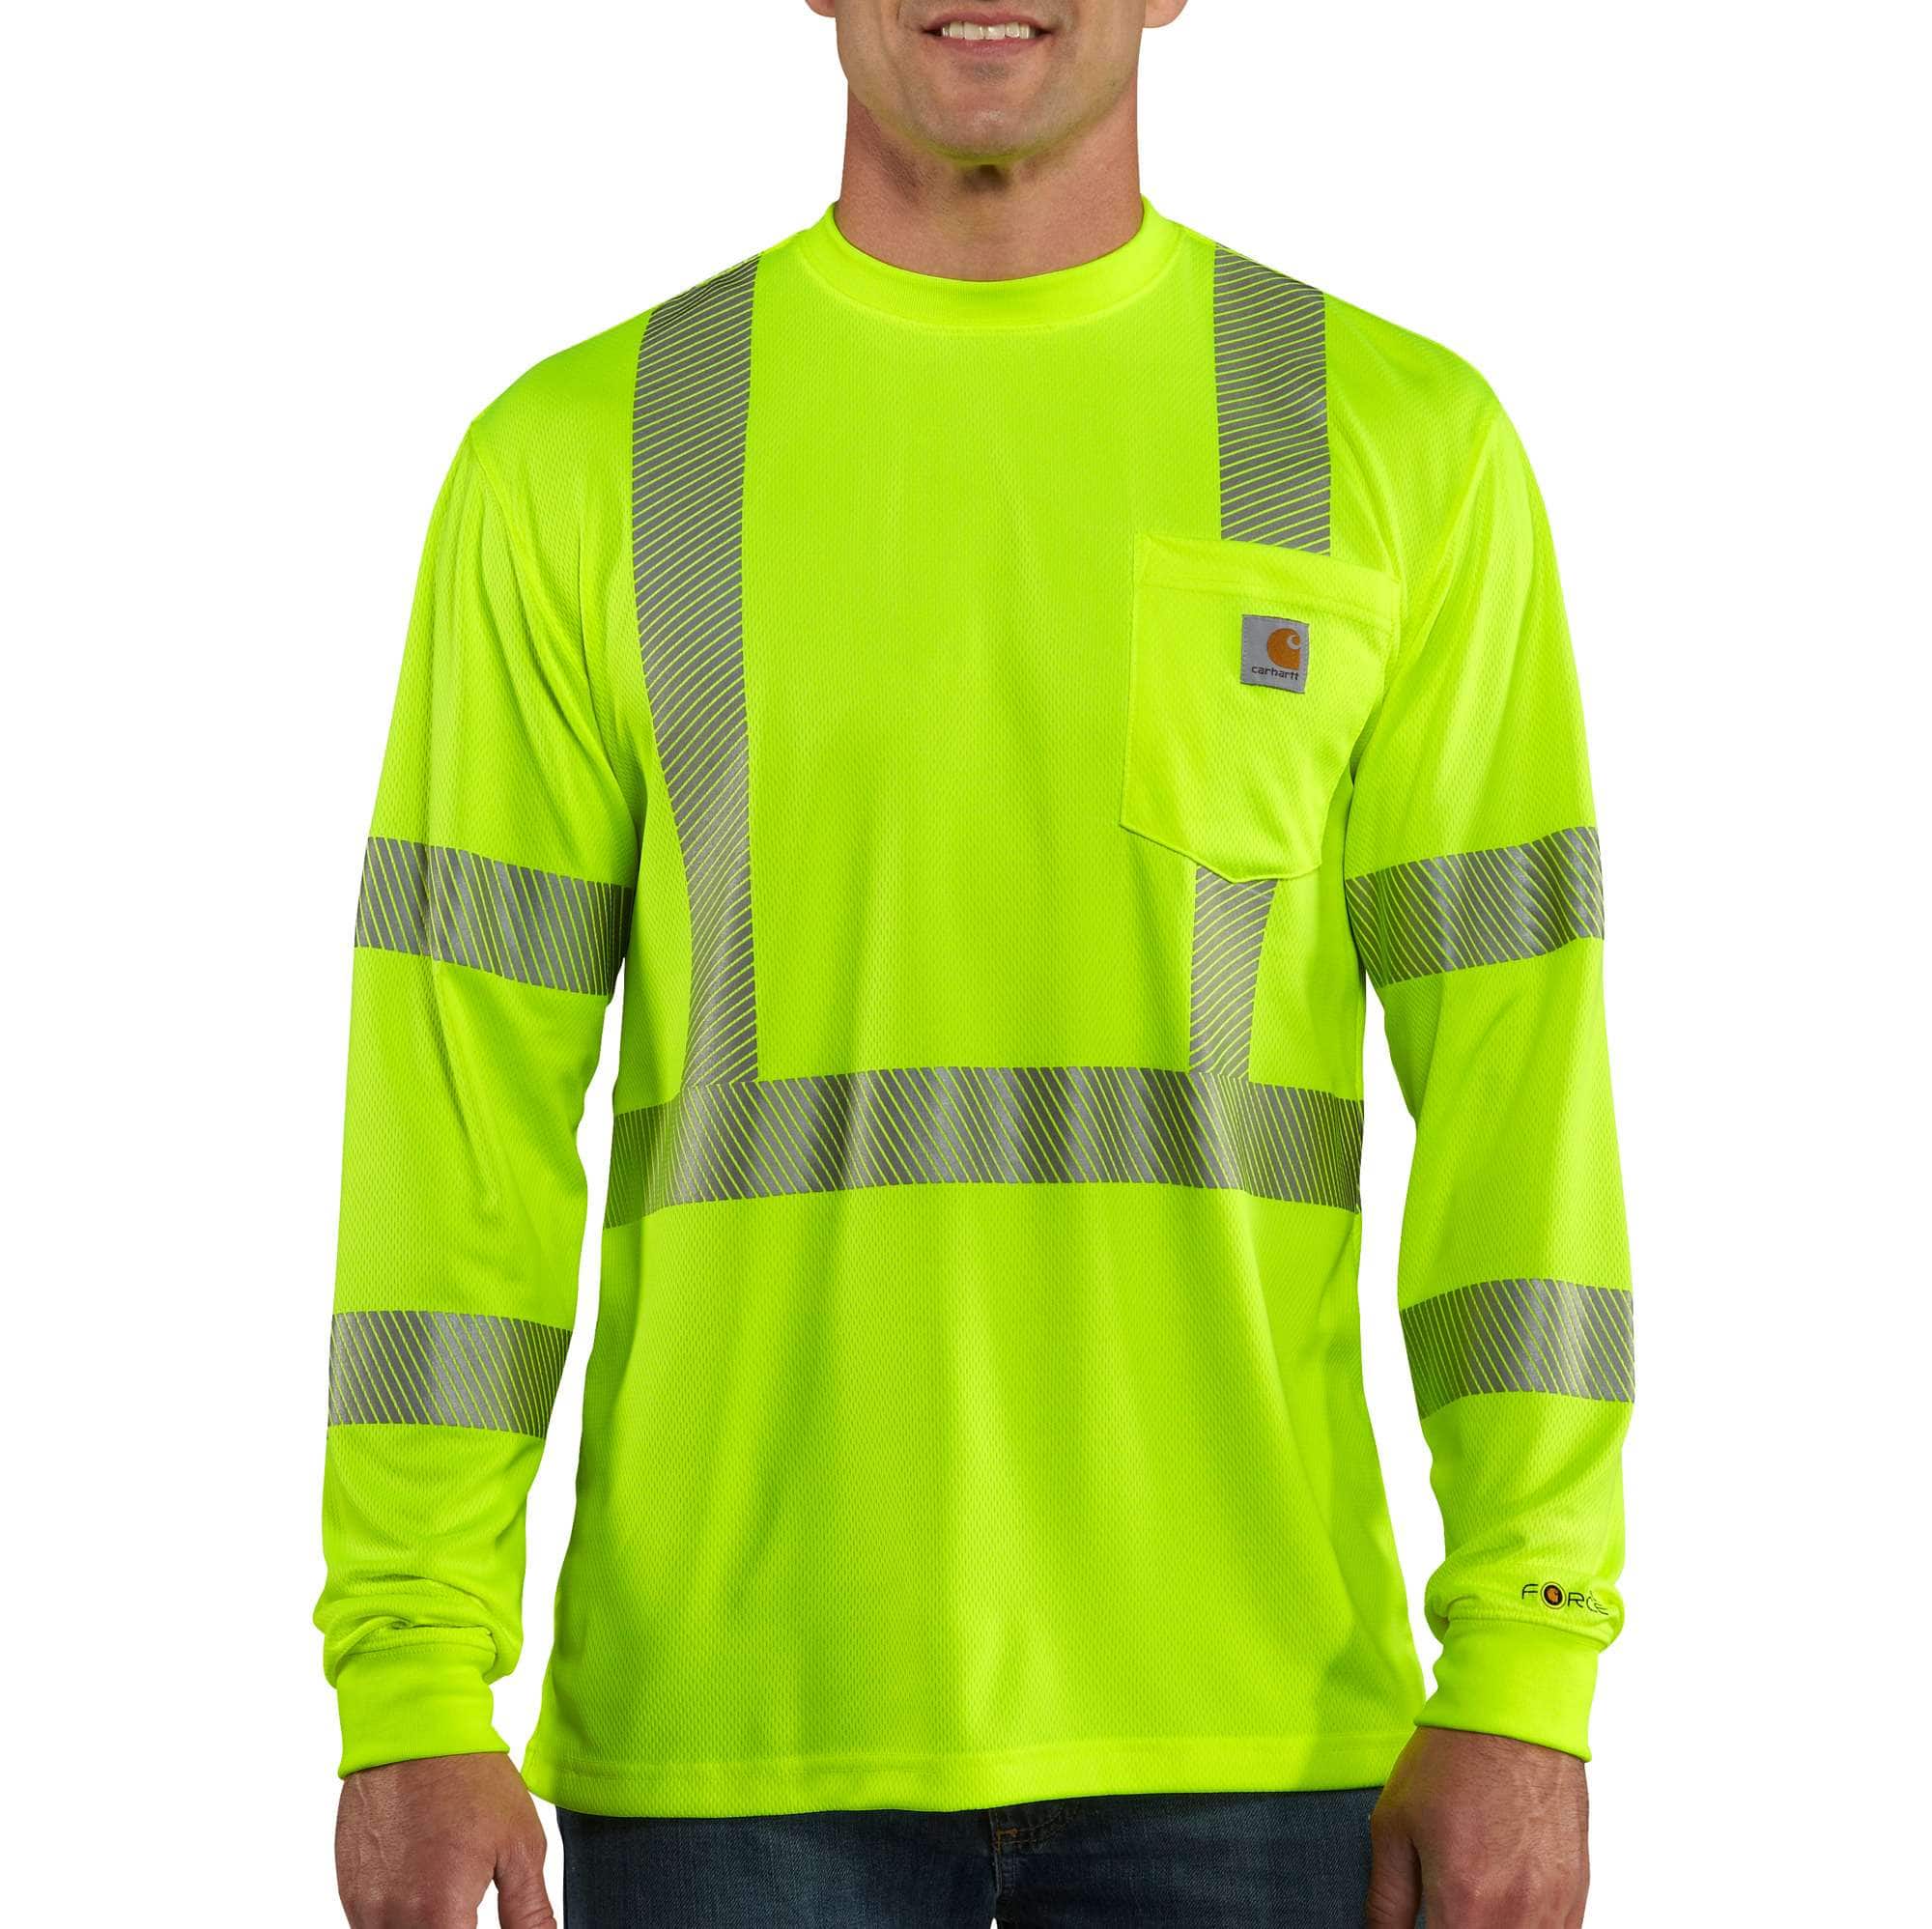 Carhartt Men's Force High-Visibility Long-Sleeve Class 3 T-Shirt, Brite Lime